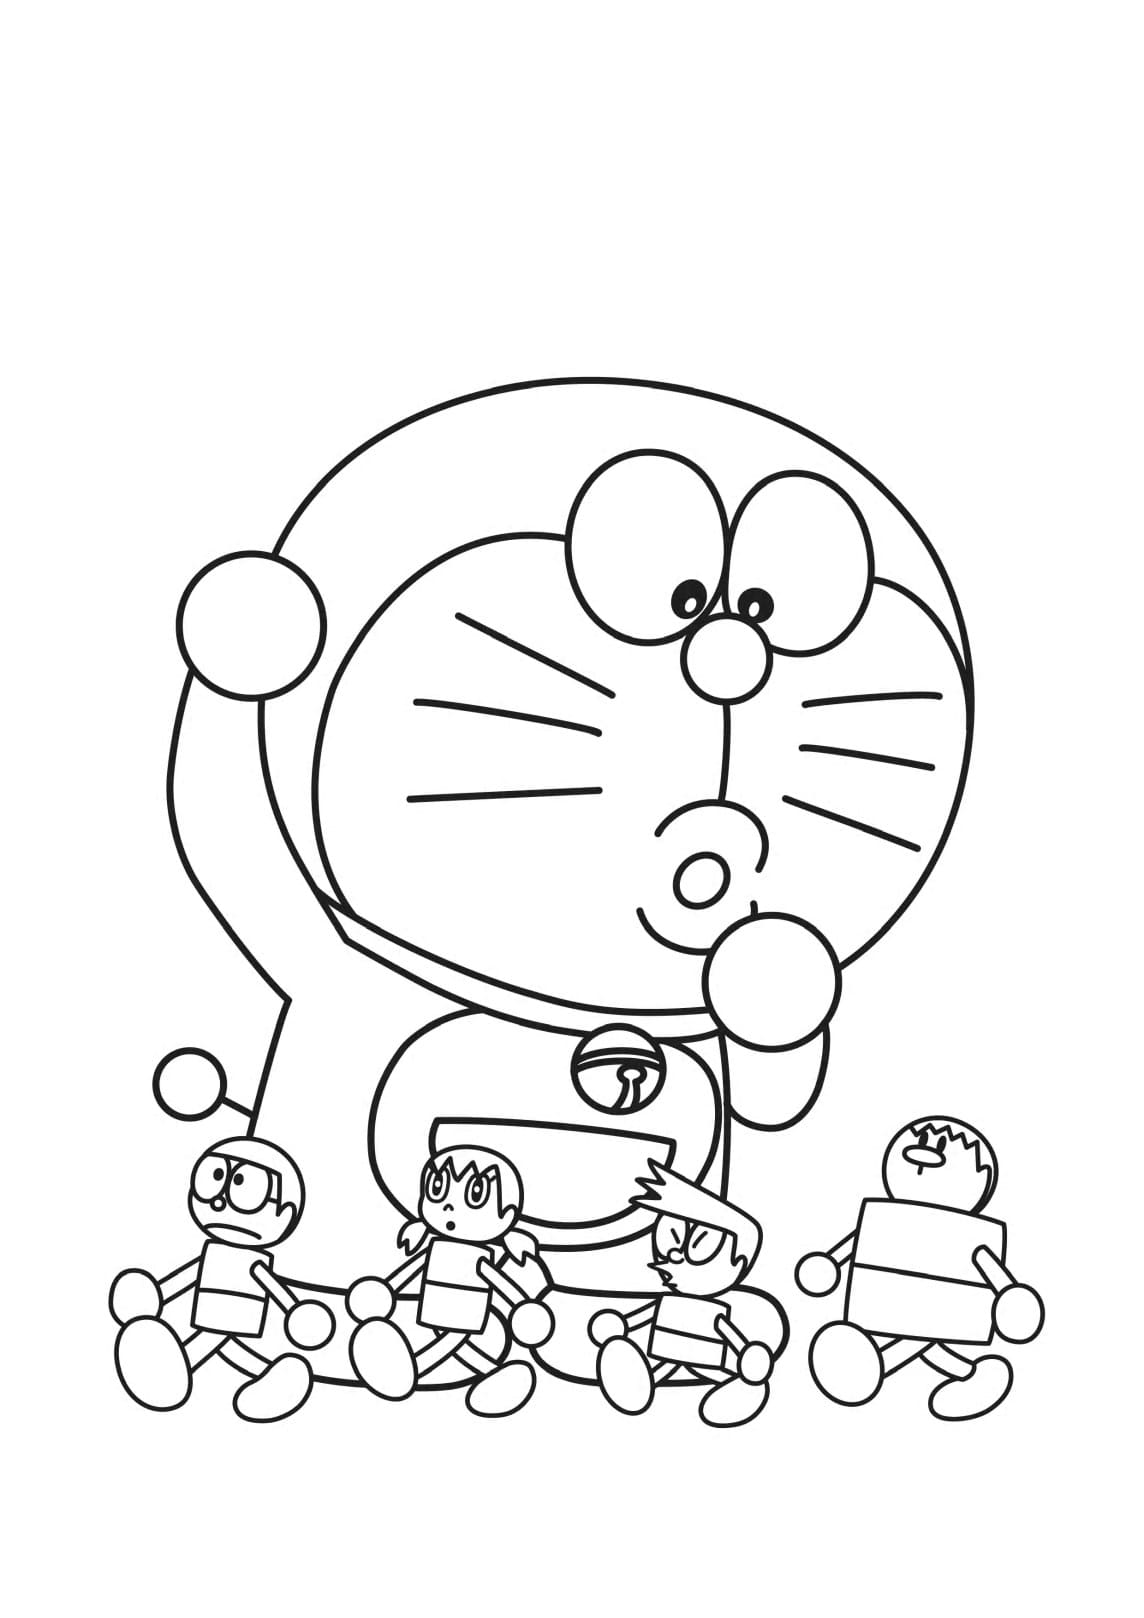 Doraemon-Ausmalbilder-ausmalbilderkinder.de-40